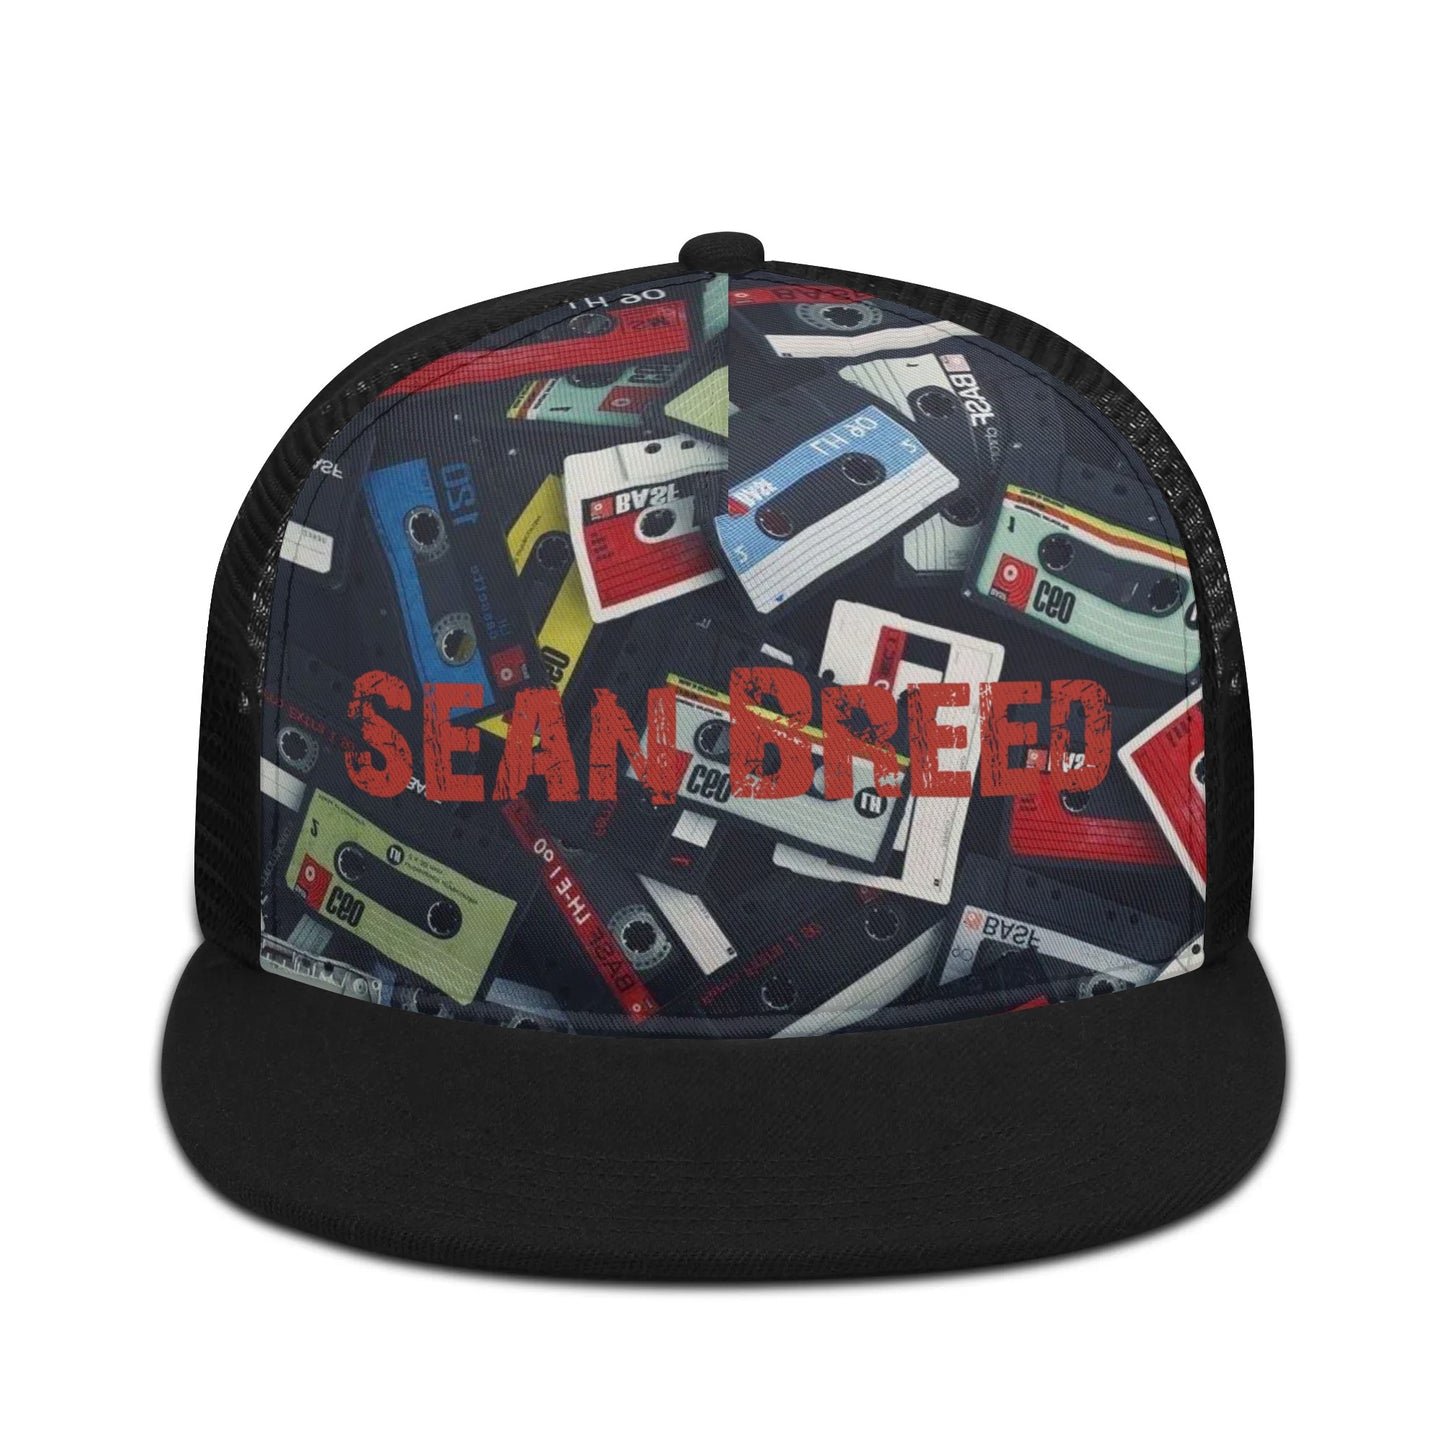 Sean Breed Throwback Cassette Style Adjustable Snapback Trucker Hat